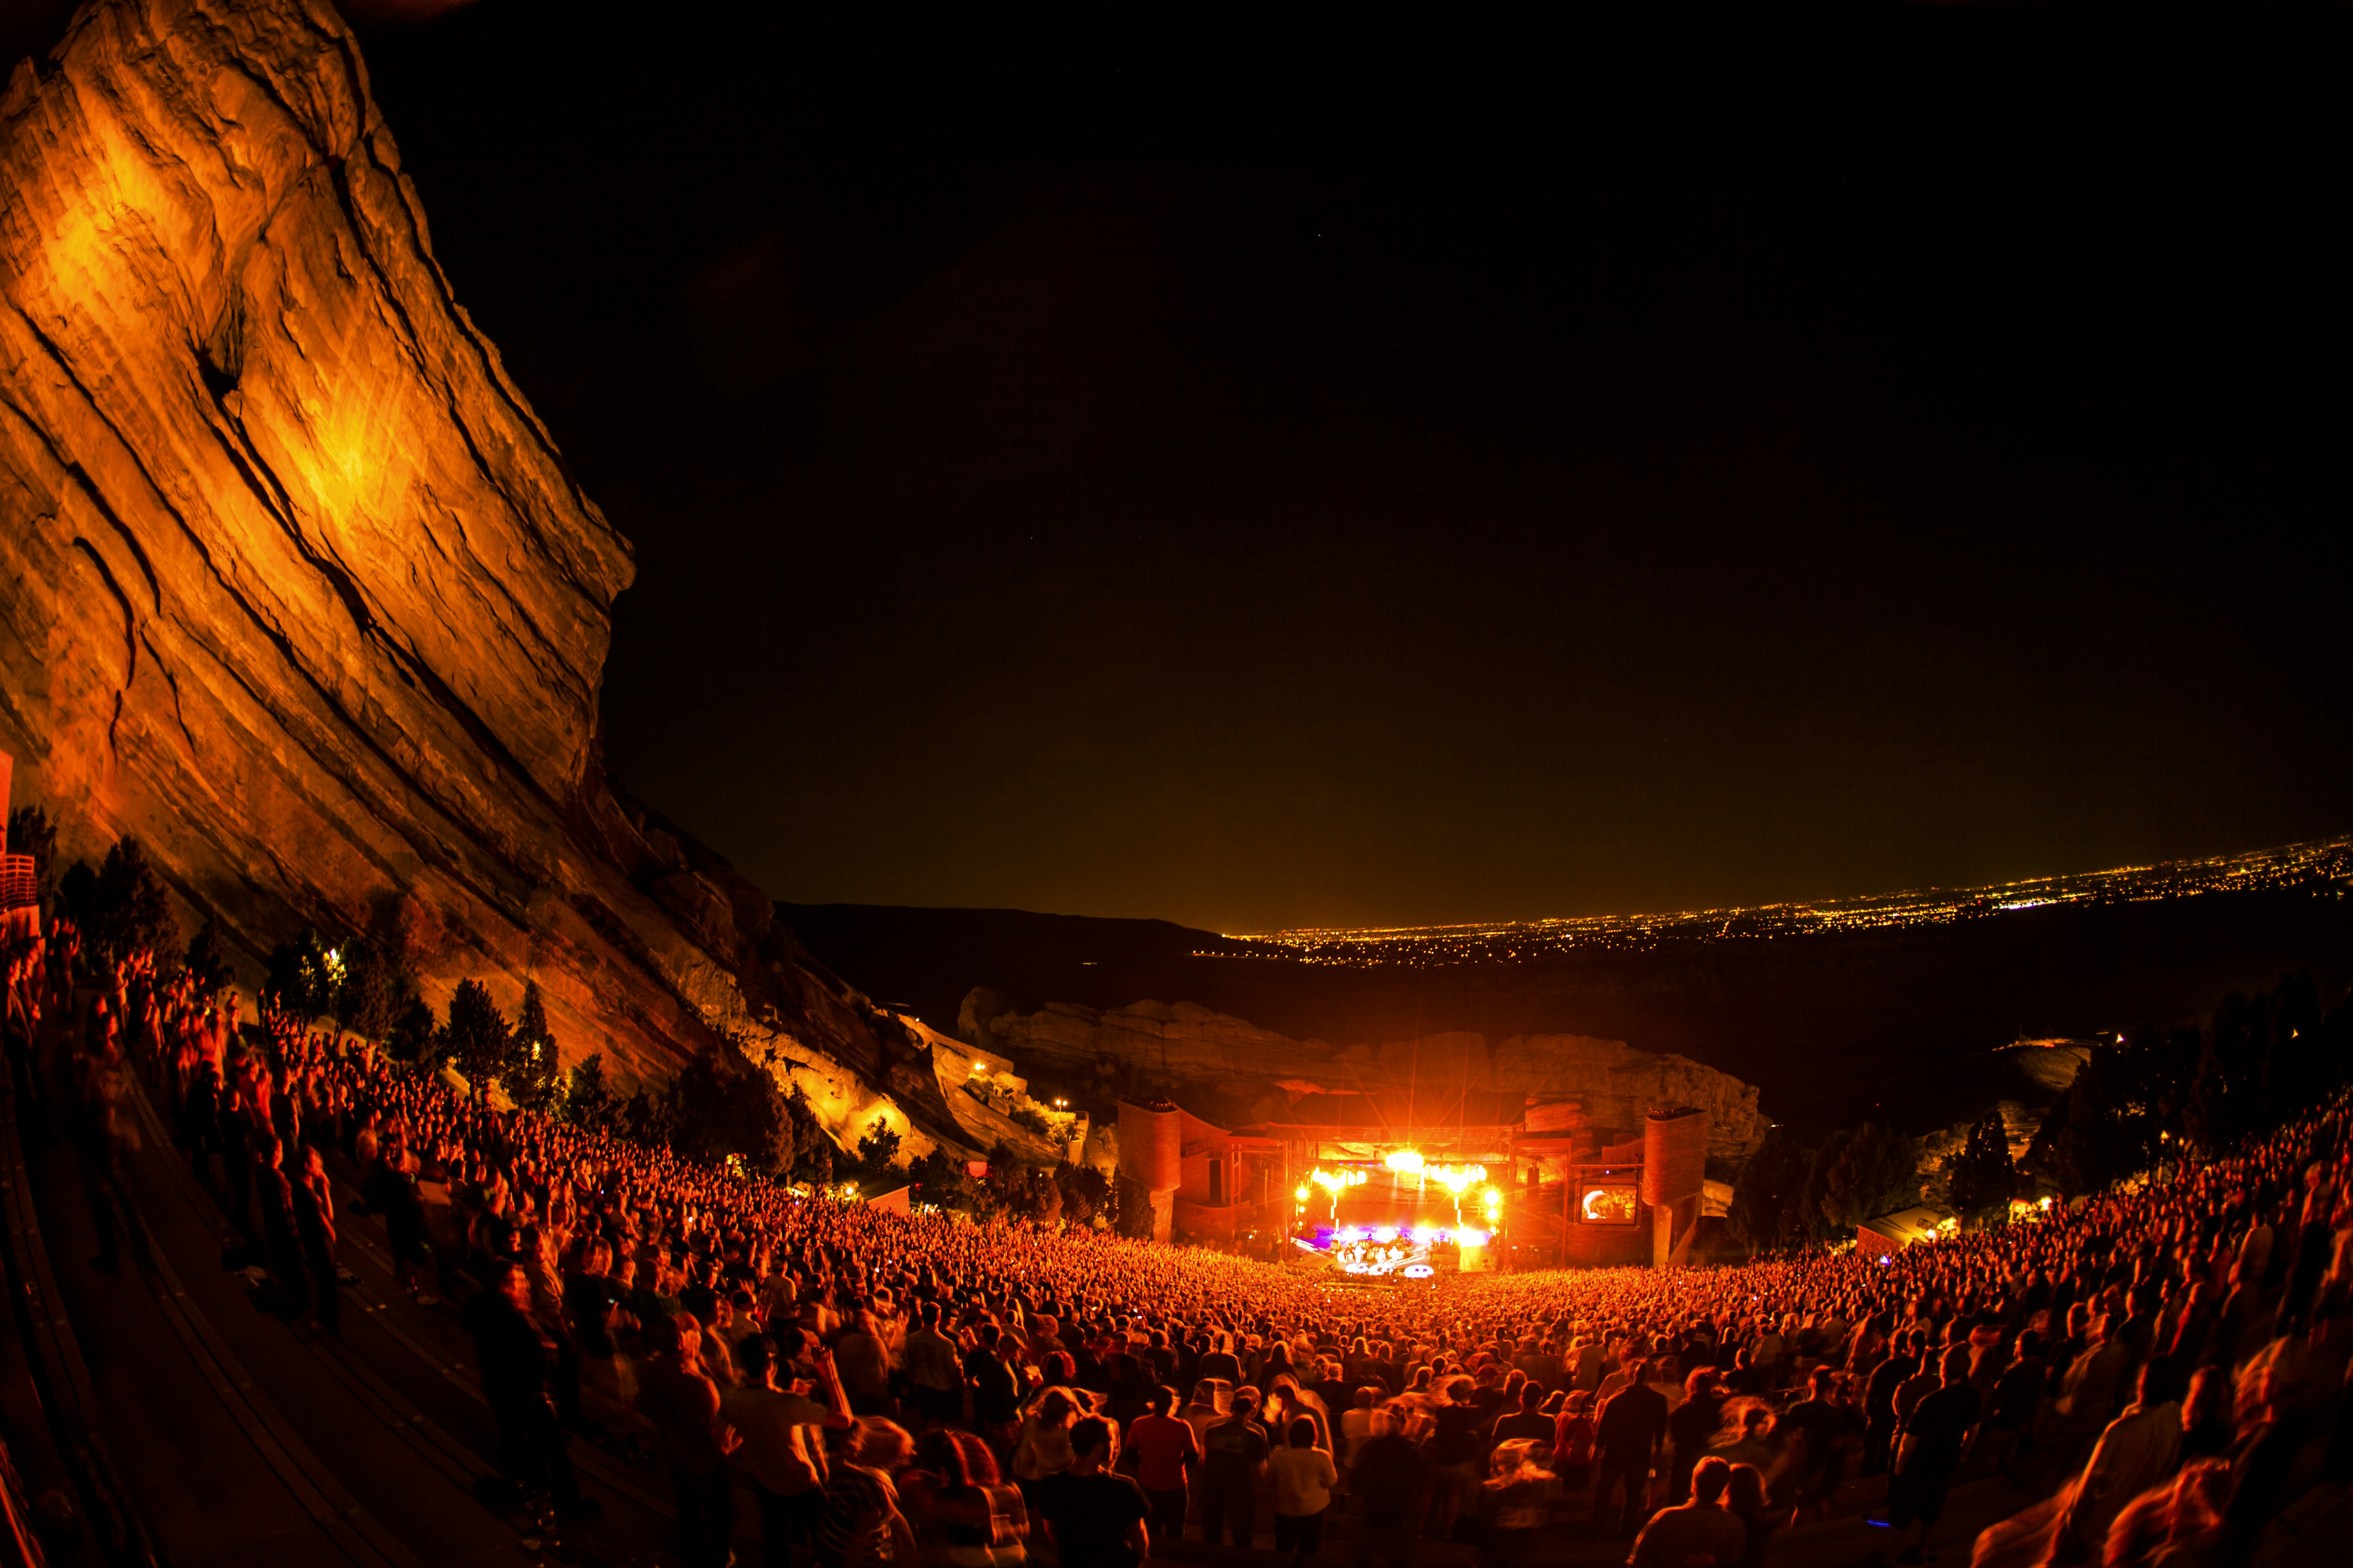 Crowd at Red Rocks Amphitheatre in Morrison, Colorado